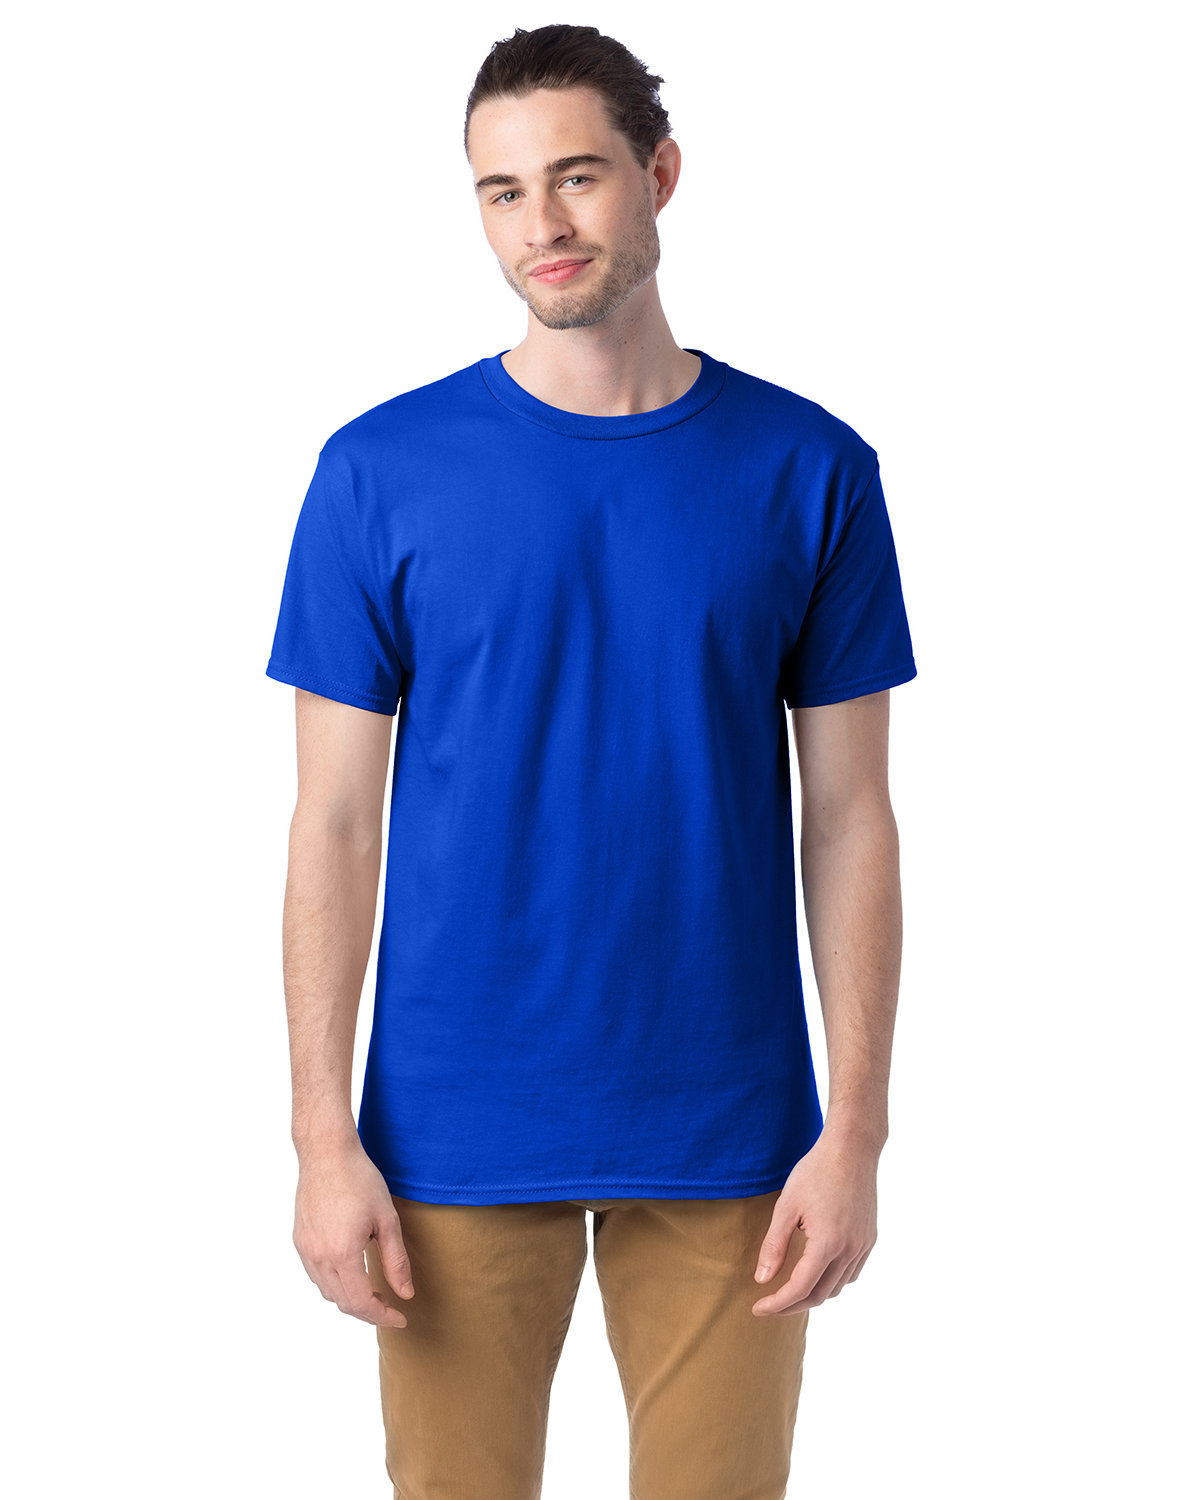 Hanes Unisex 5.2 oz., Comfortsoft® Cotton T-Shirt ATHLETIC ROYAL 